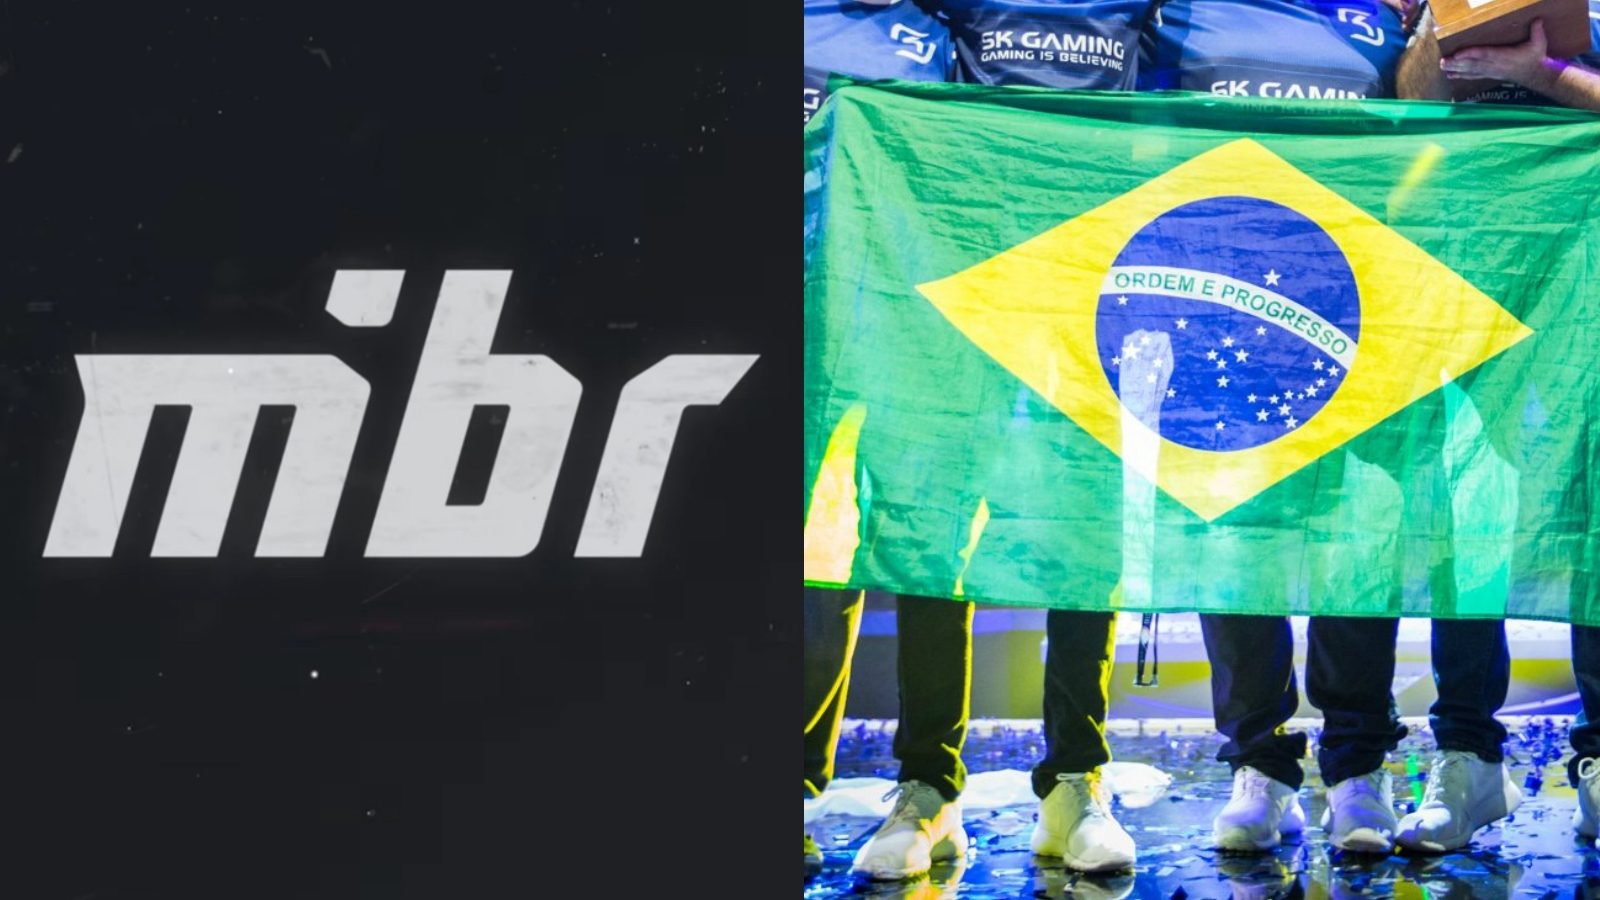 MIBR - Made In Brazil Esports